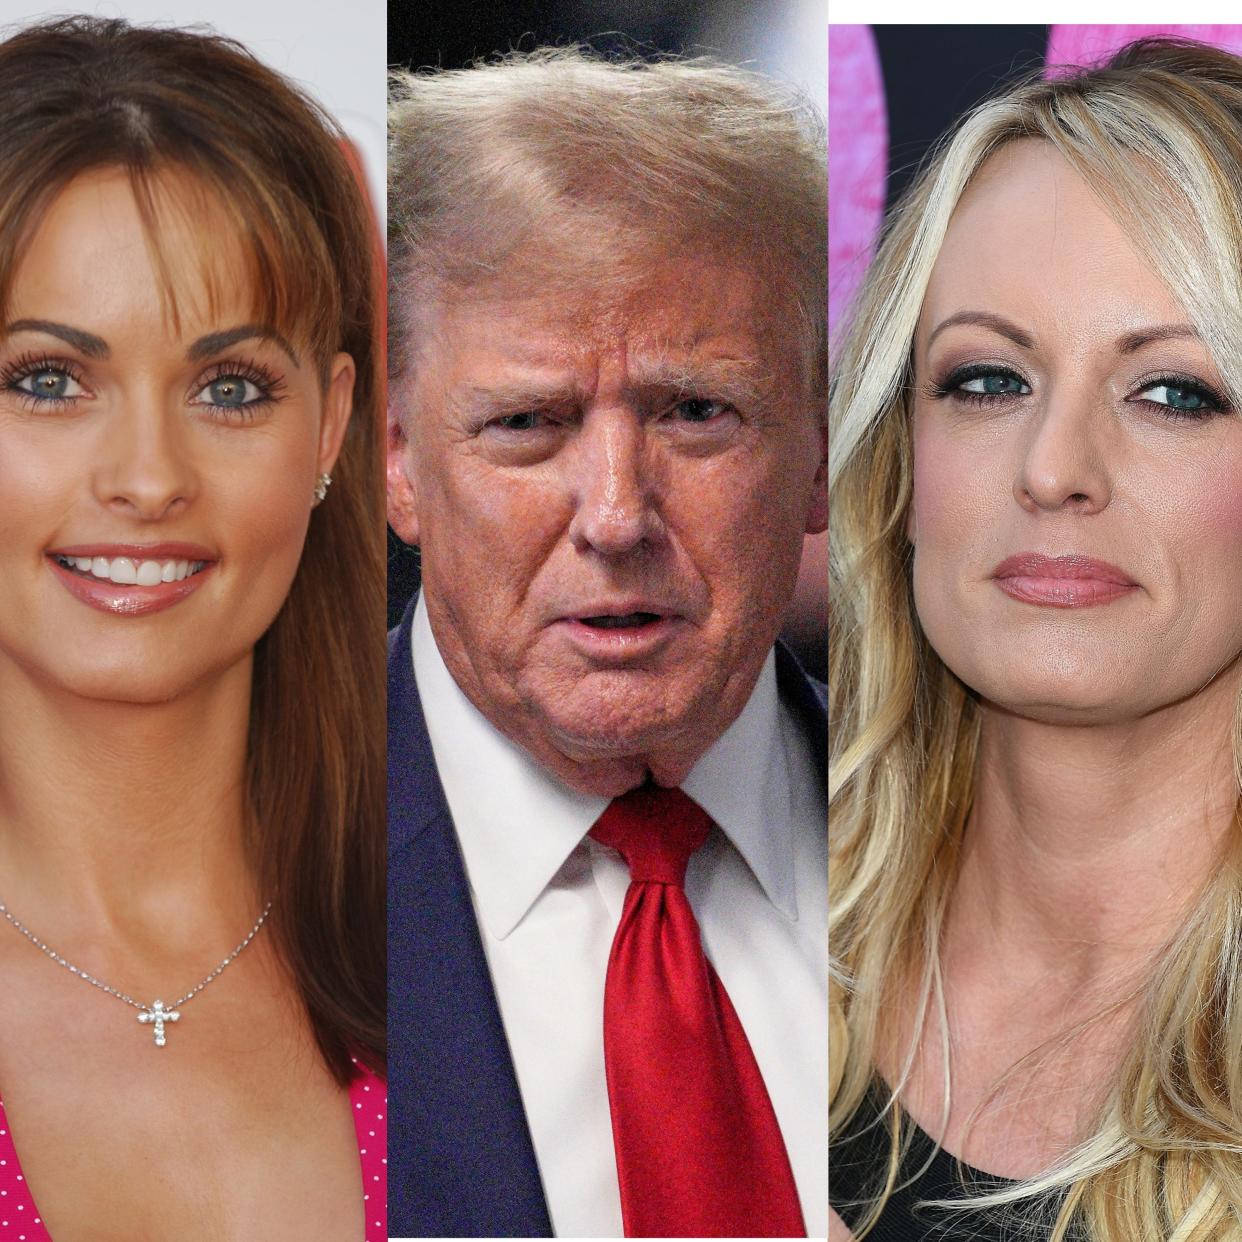 A composite image of Karen McDougal, Donald Trump, and Stormy Daniels.